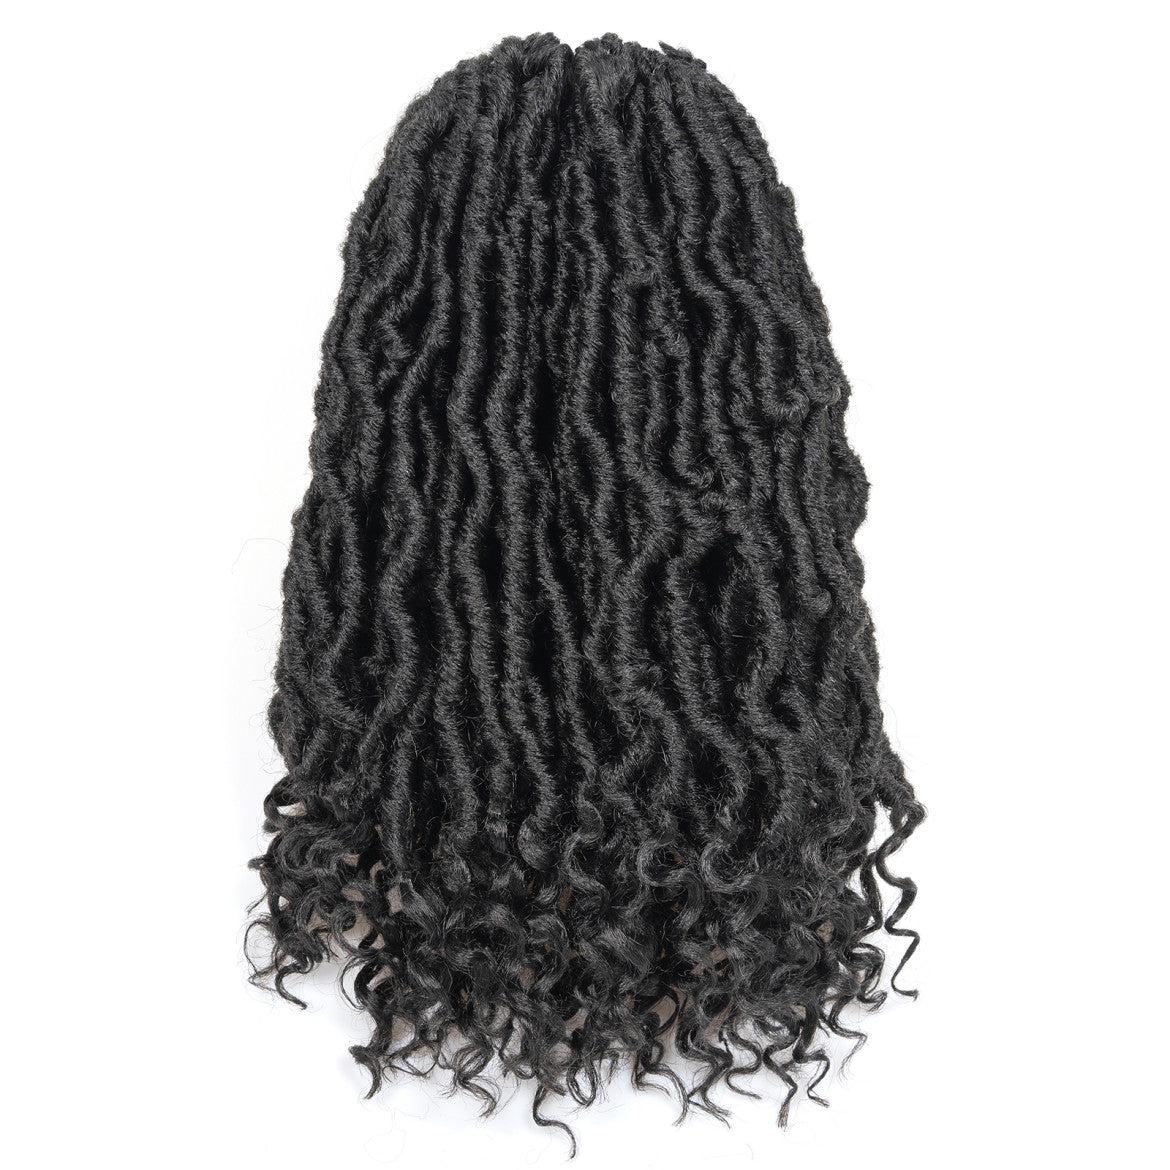 Toyotress Passion Locs Crochet Hair 10-24 Inch 1 Pack | Pre-Looped Handmade Curly Hair Crochet Synthetic Braiding Hair